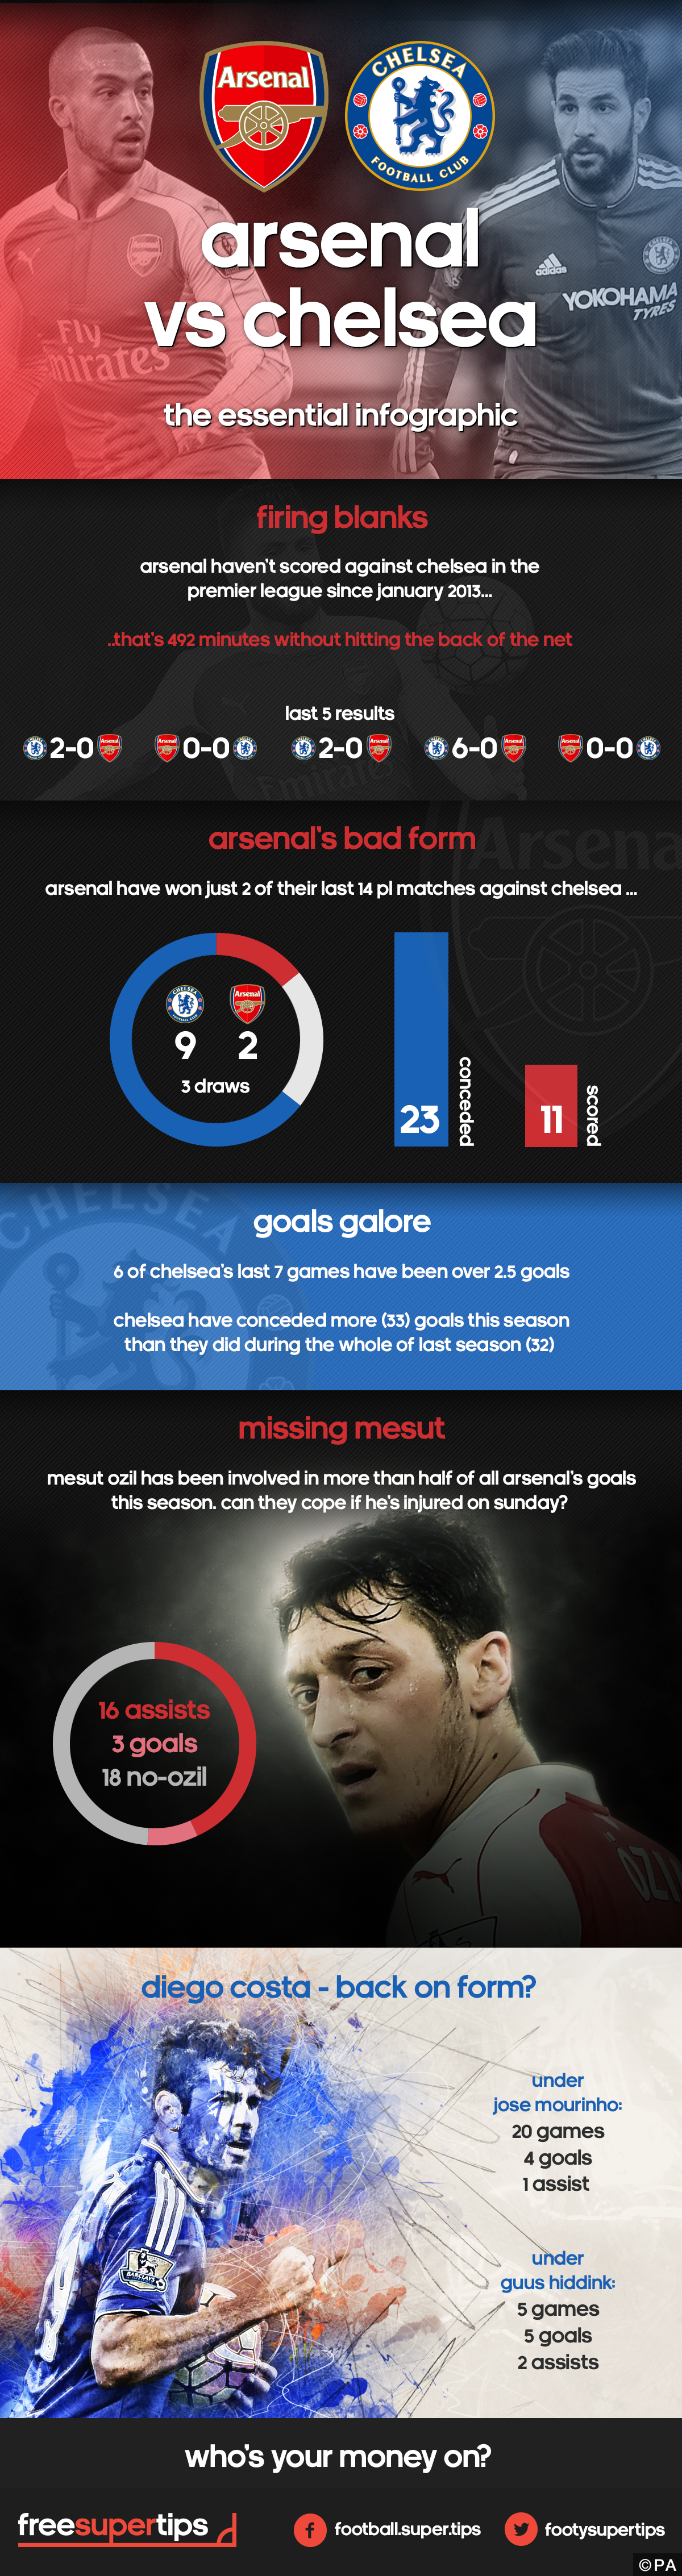 Arsenal_Chelsea_Infographic